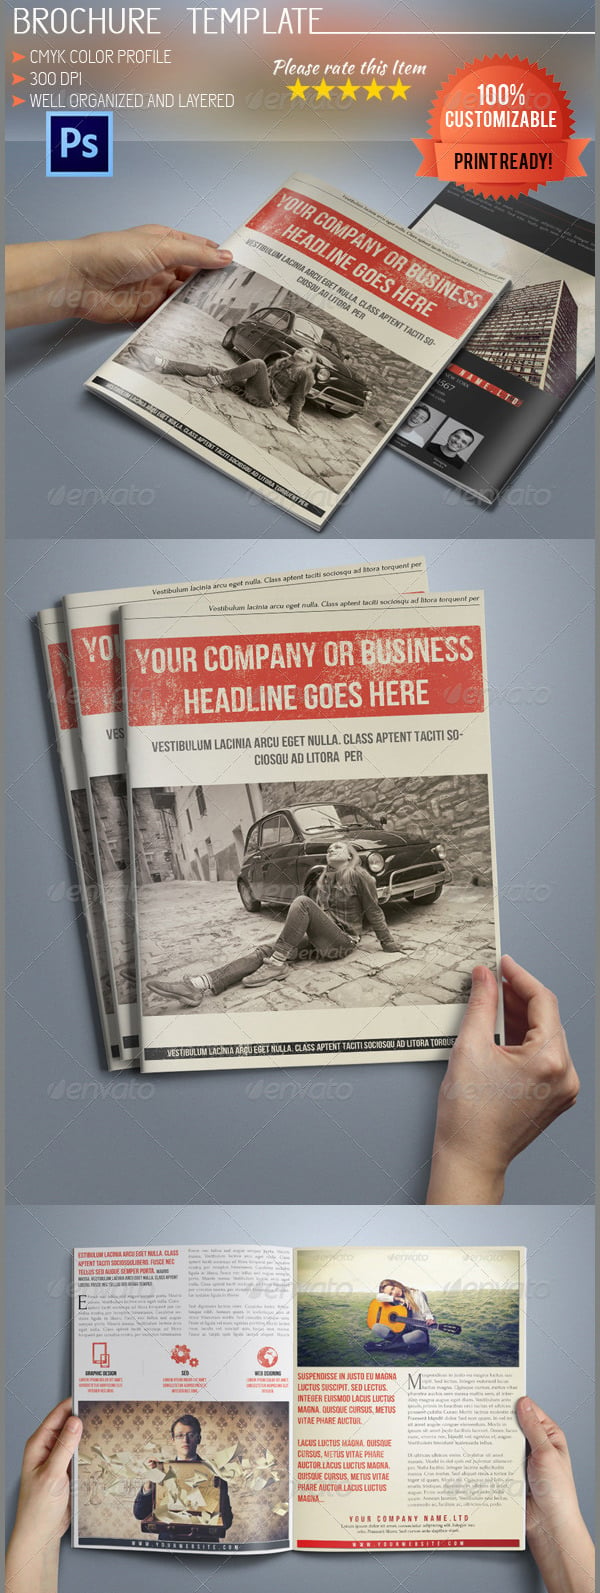 a5 retro bi fold business brochure